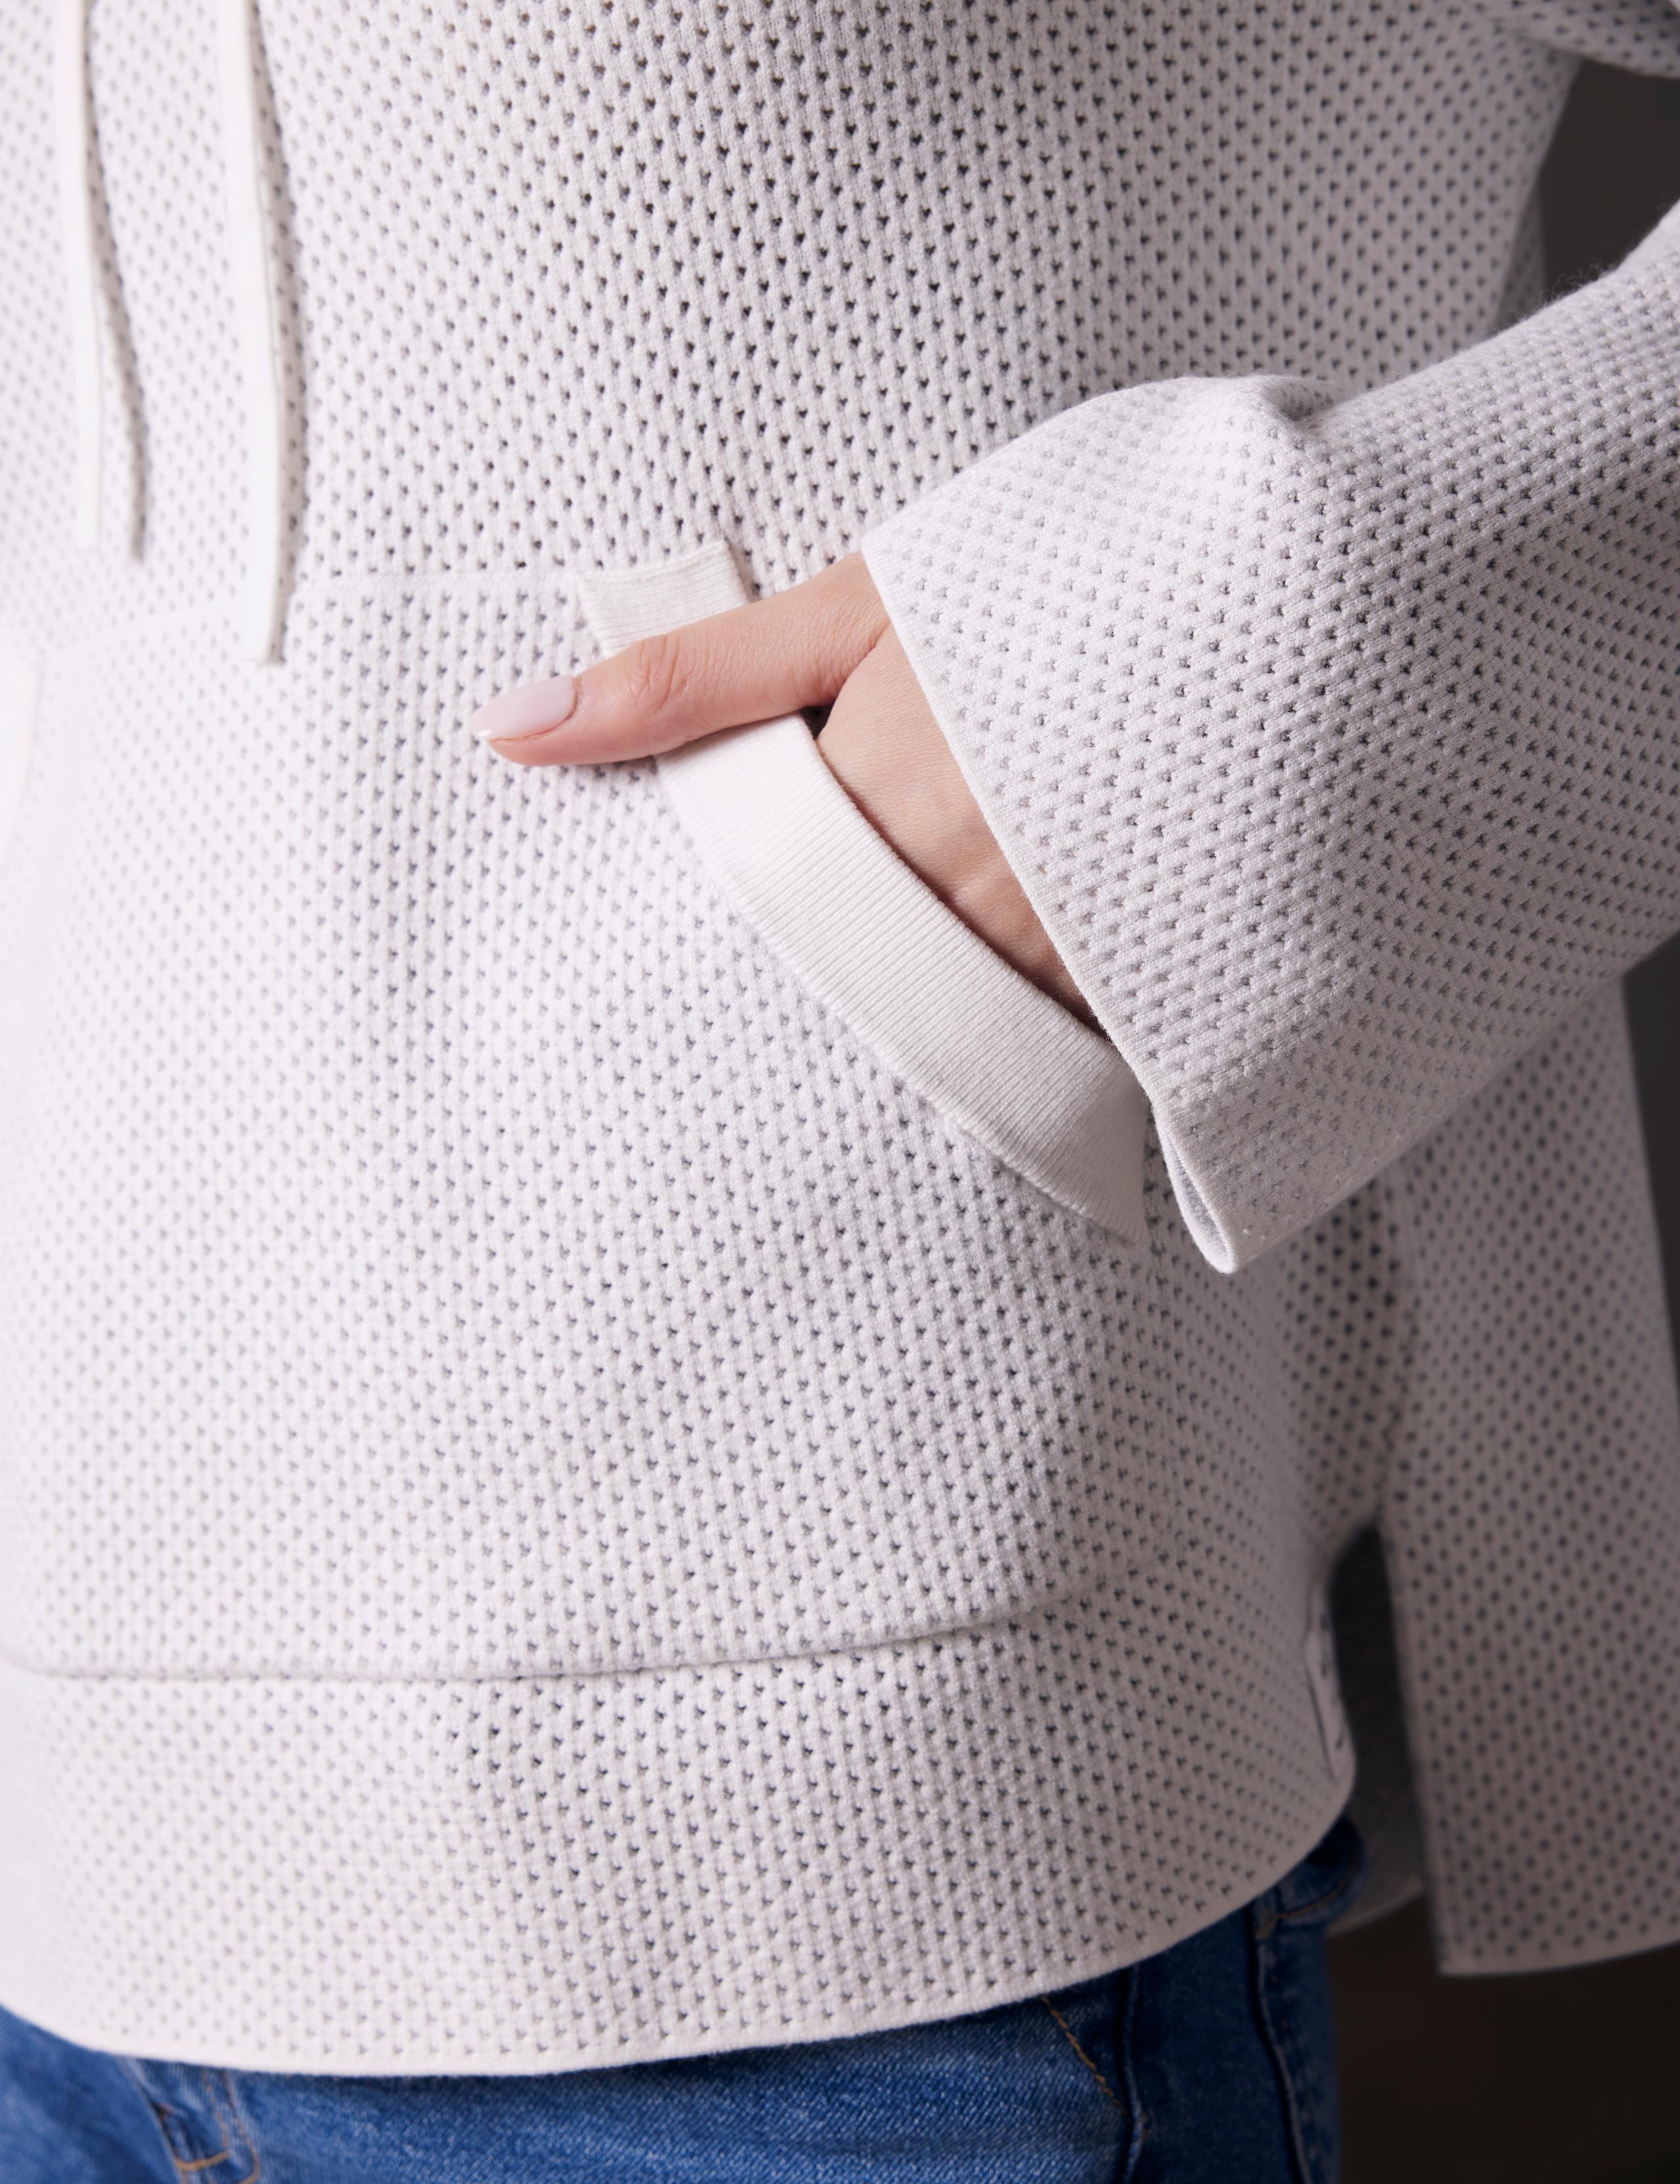 Baja mesh sweater's front pocket detail.